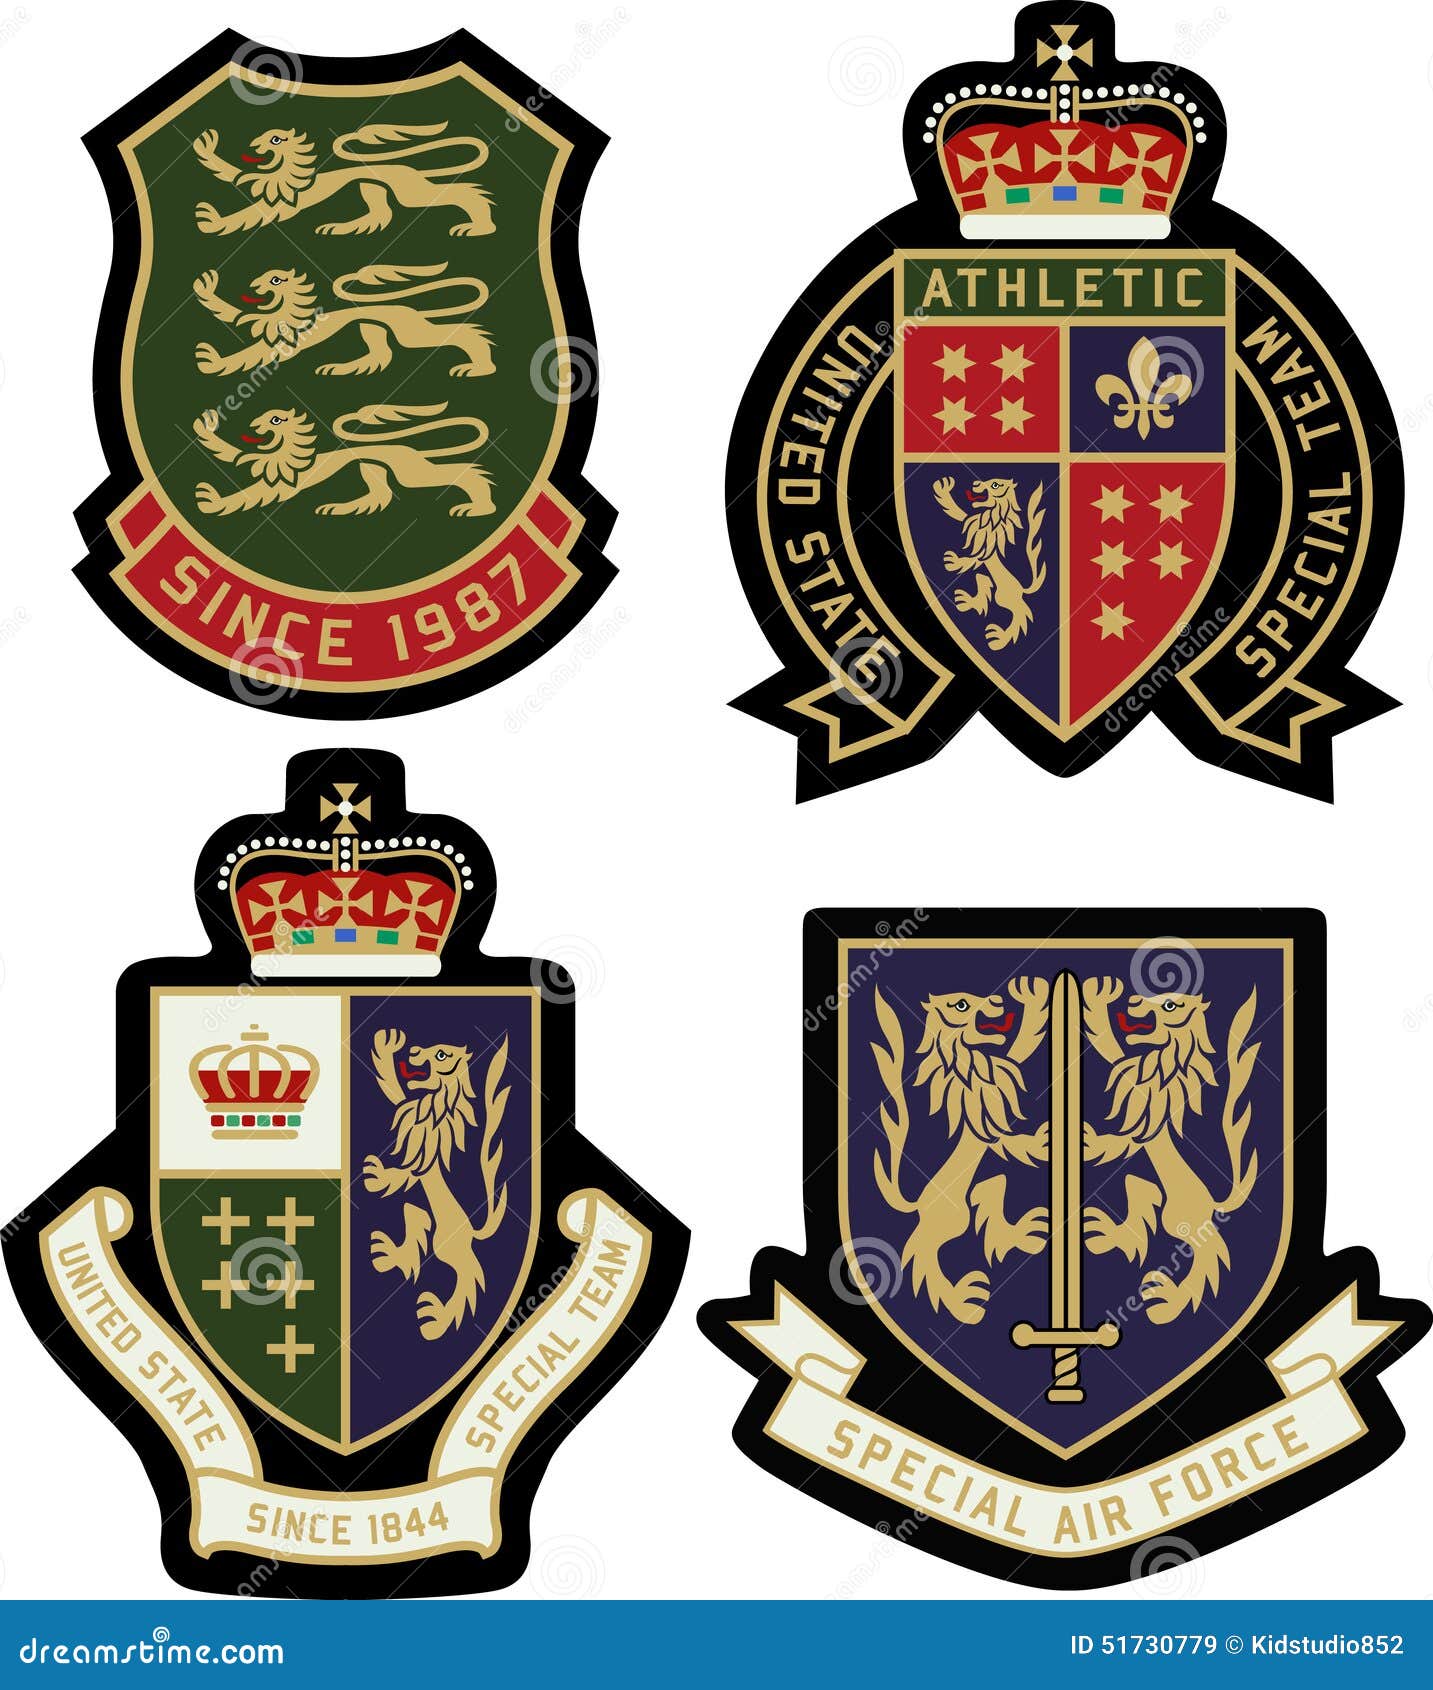 classic royal emblem badge